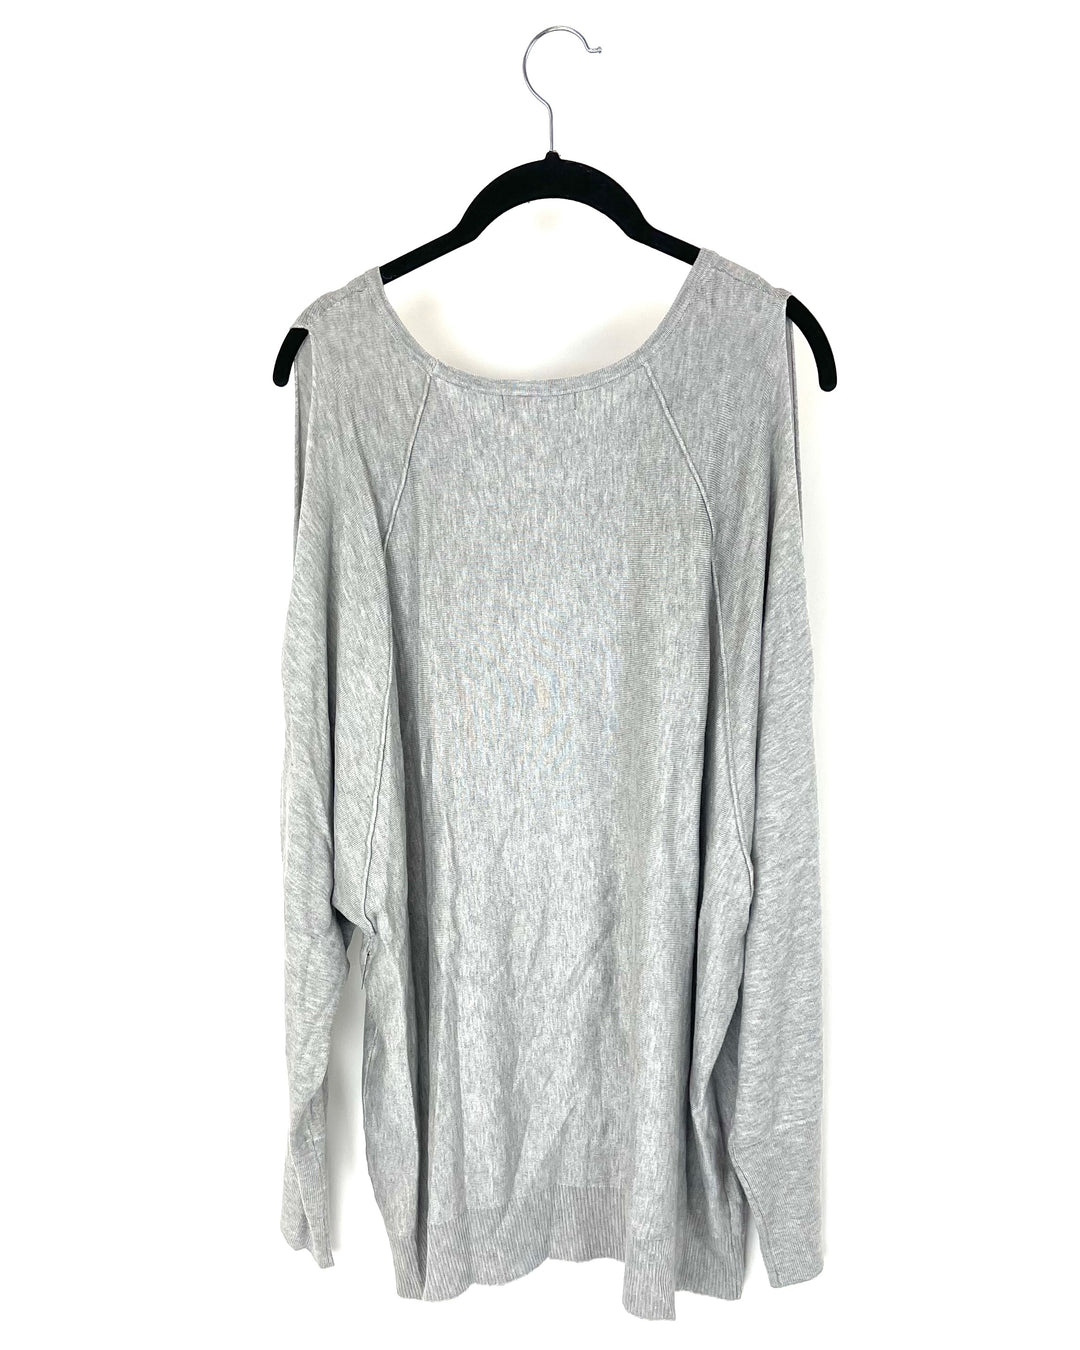 Grey Cold Shoulder Sweater - Size 14/16